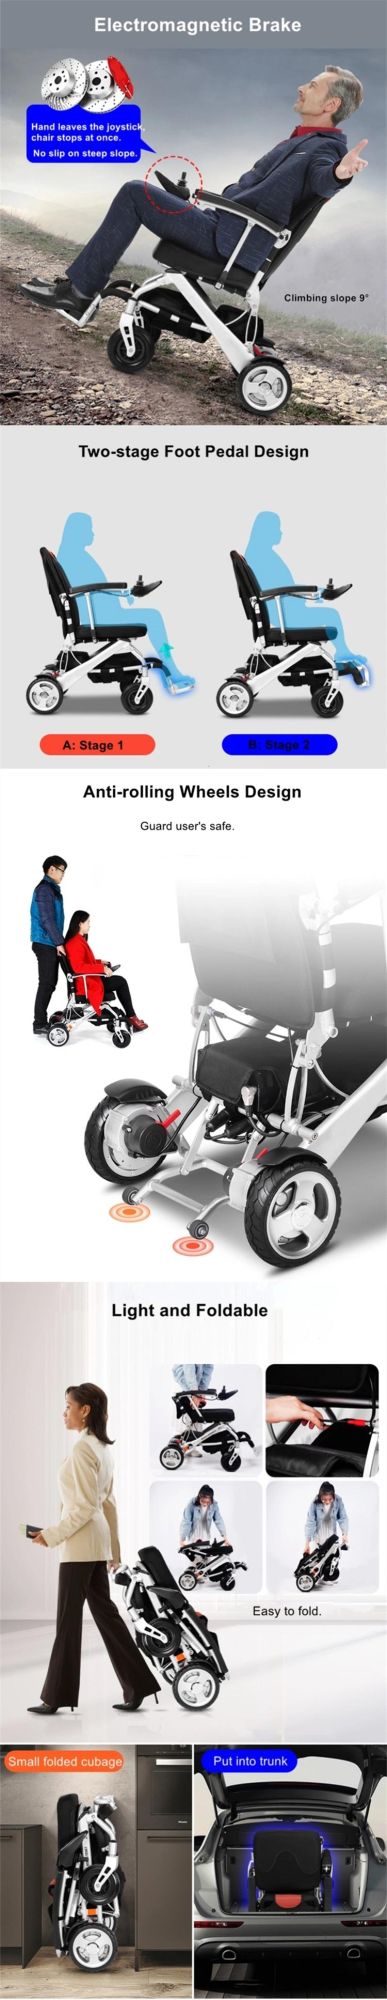 20kg Handicap Light Foldable Silla De Ruedas Electrica Electric Wheelchair